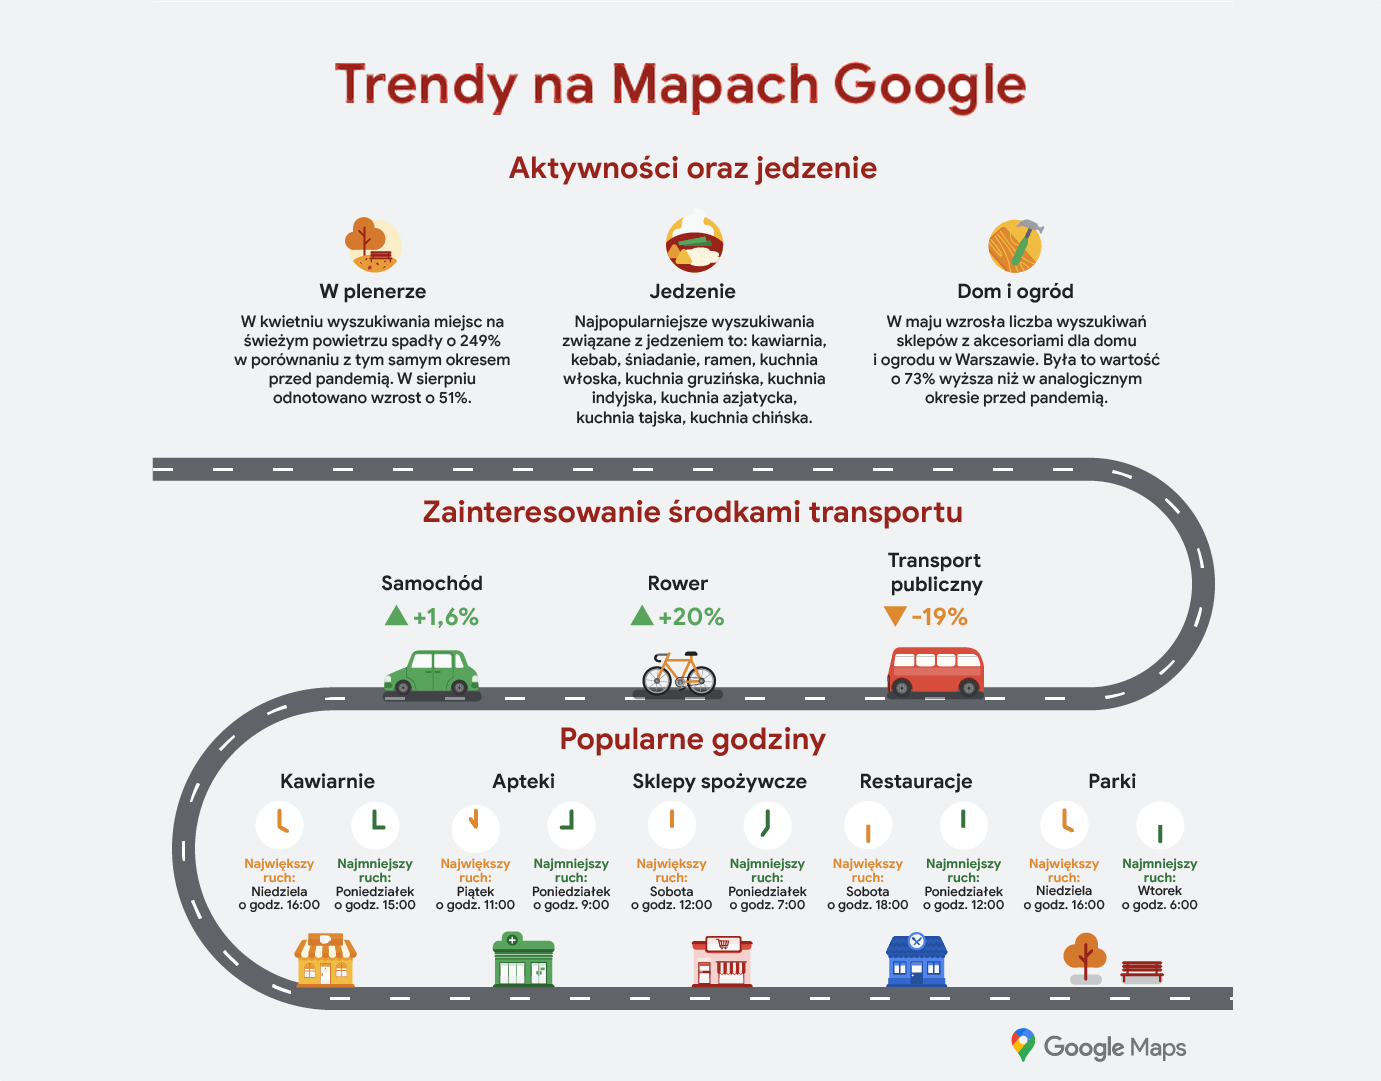 Trendy na Mapach Google w Polsce w 2020 roku